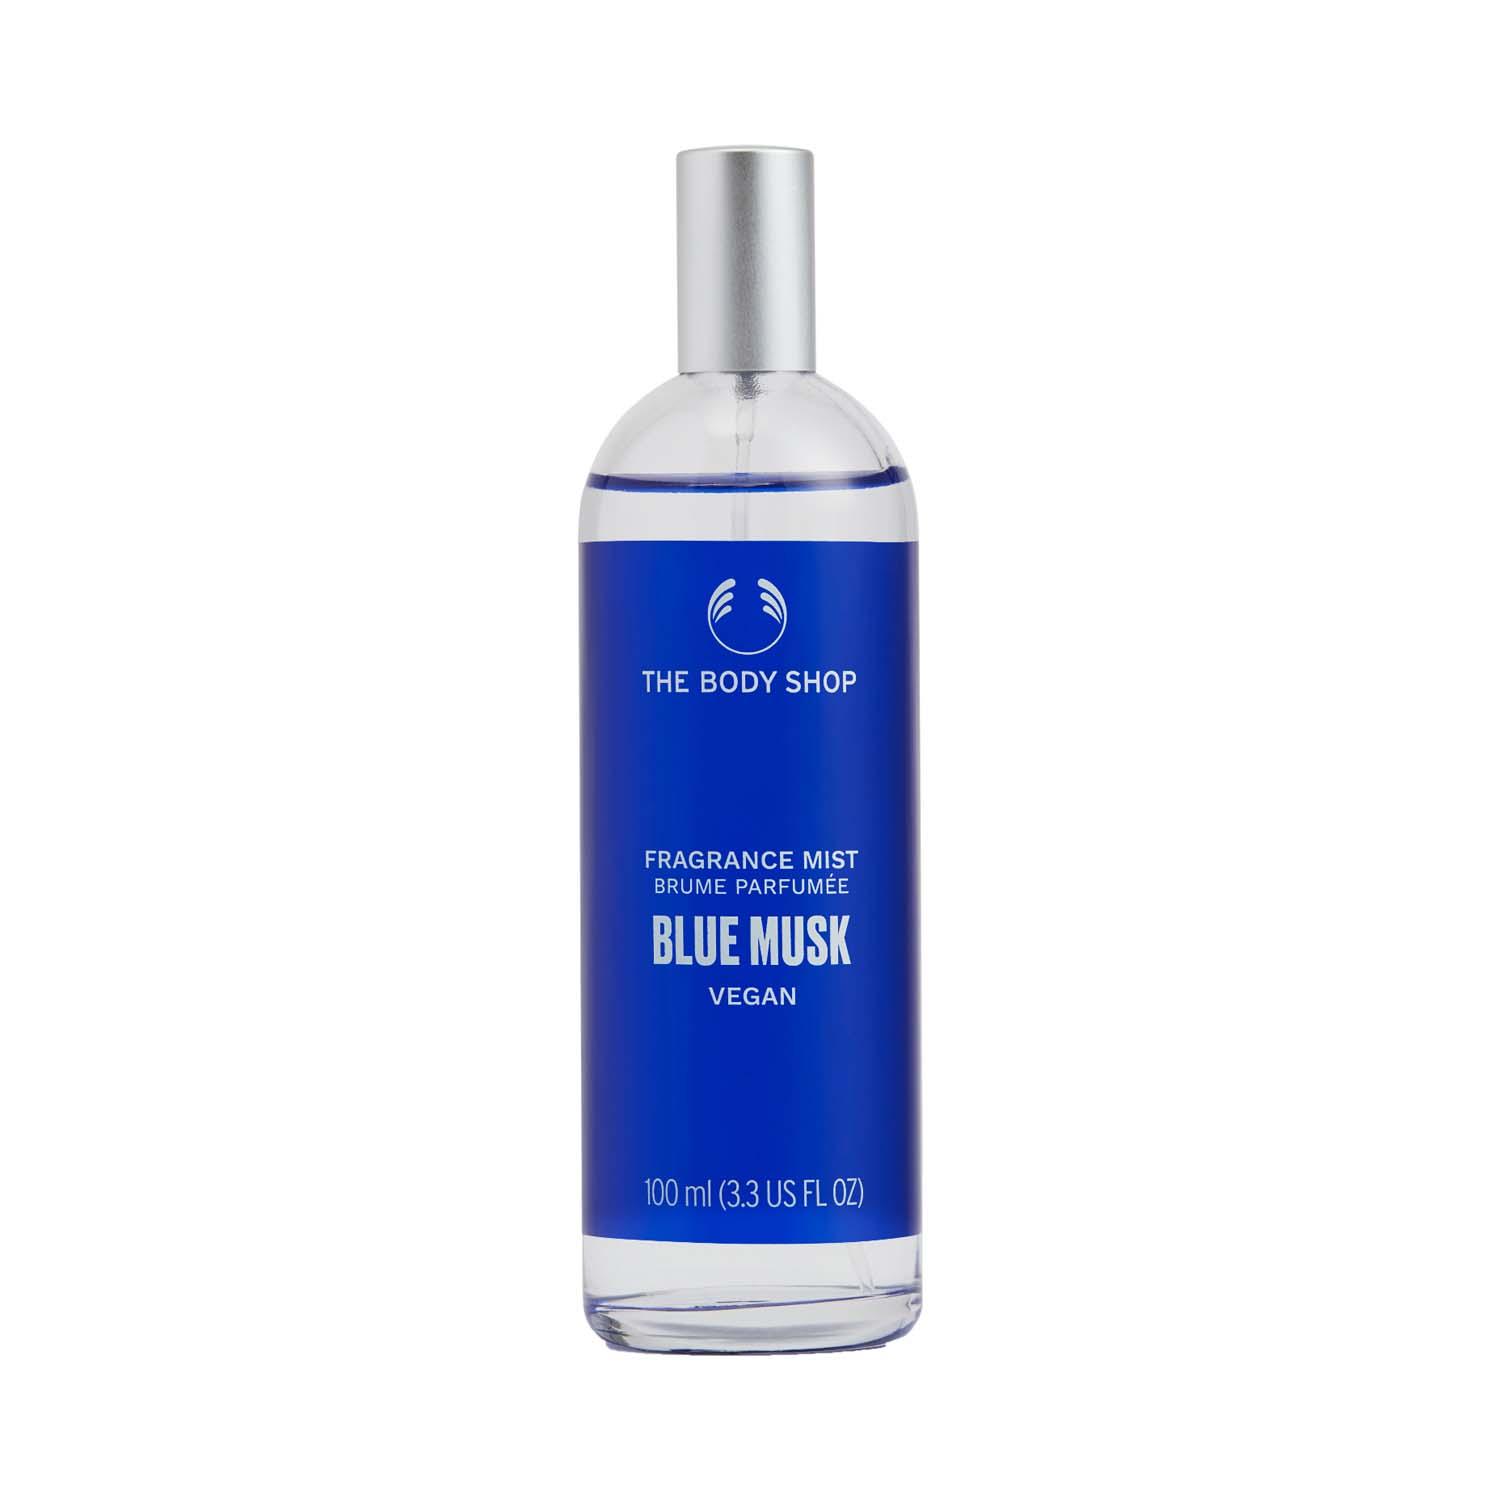 The Body Shop | The Body Shop Blue Musk Fragrance Mist (100ml)